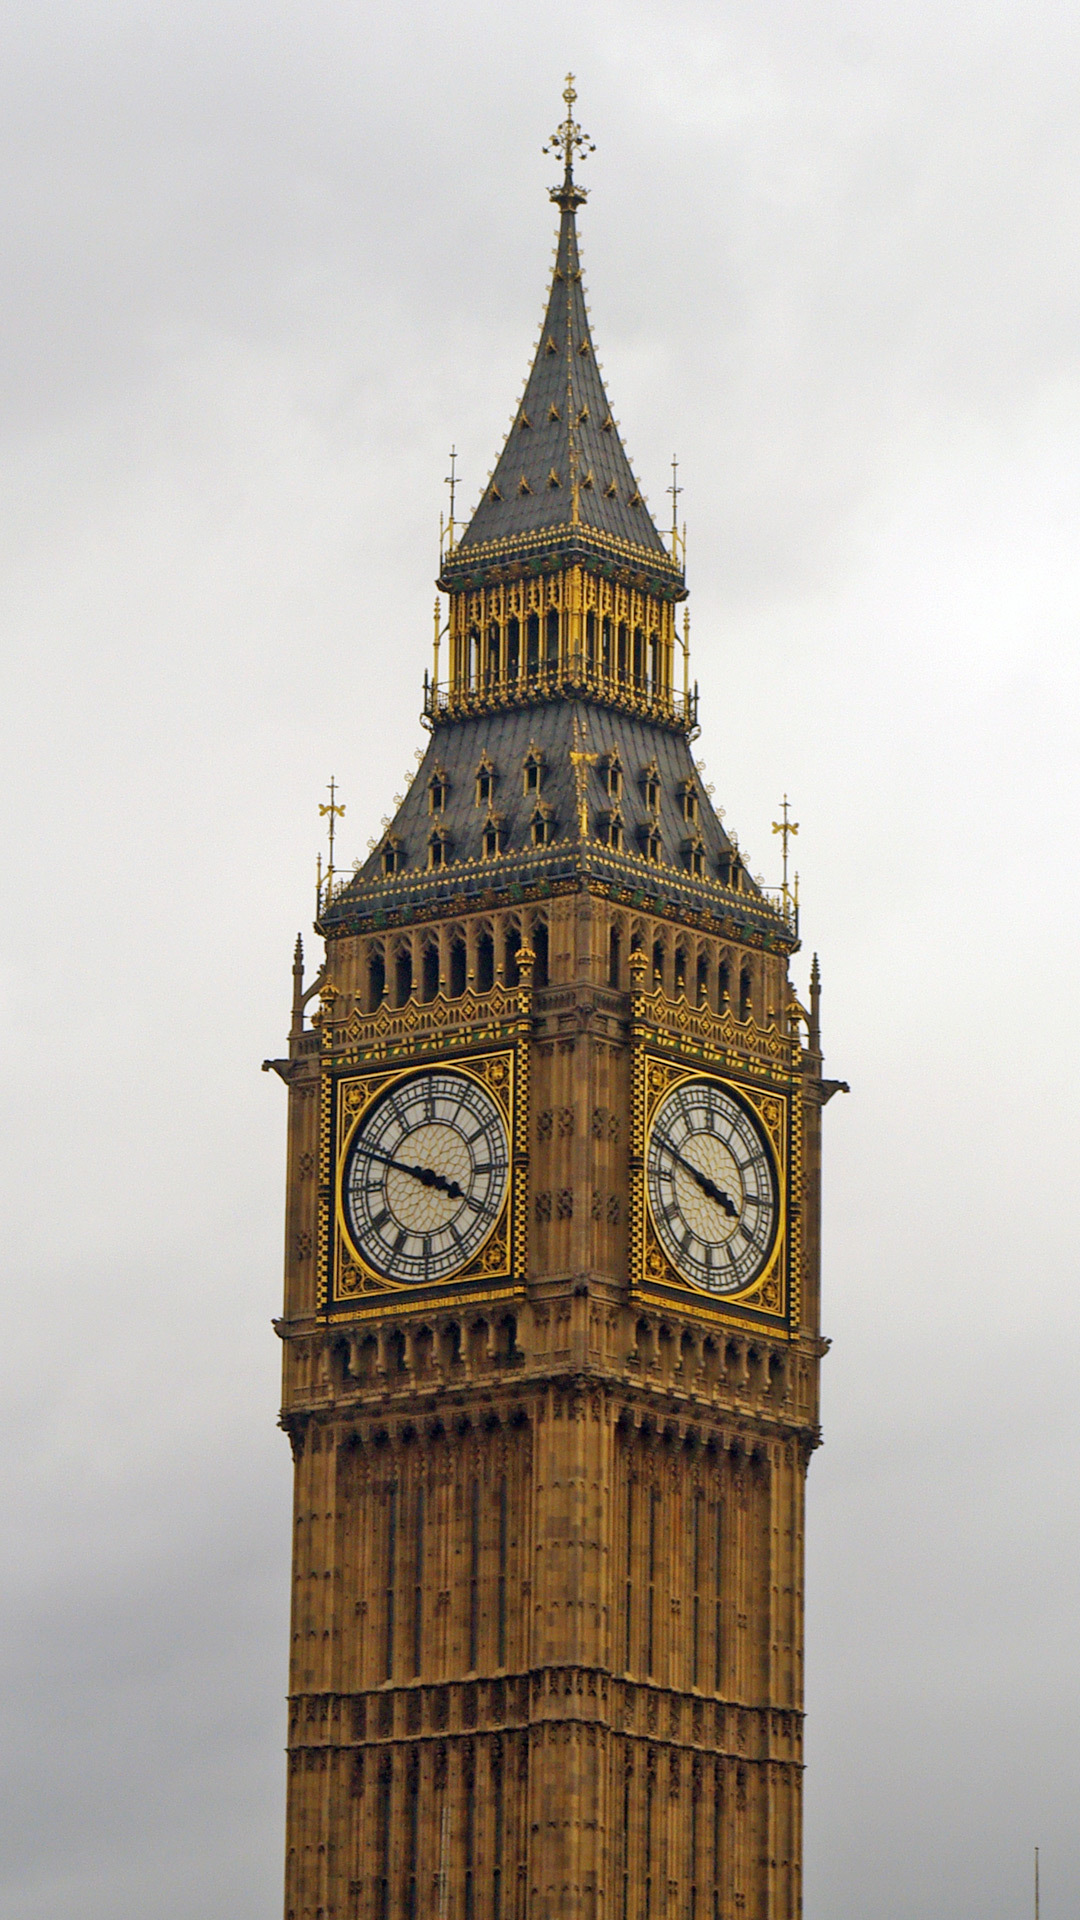 london Elizabeth Tower Houses Parliament Big Ben bell